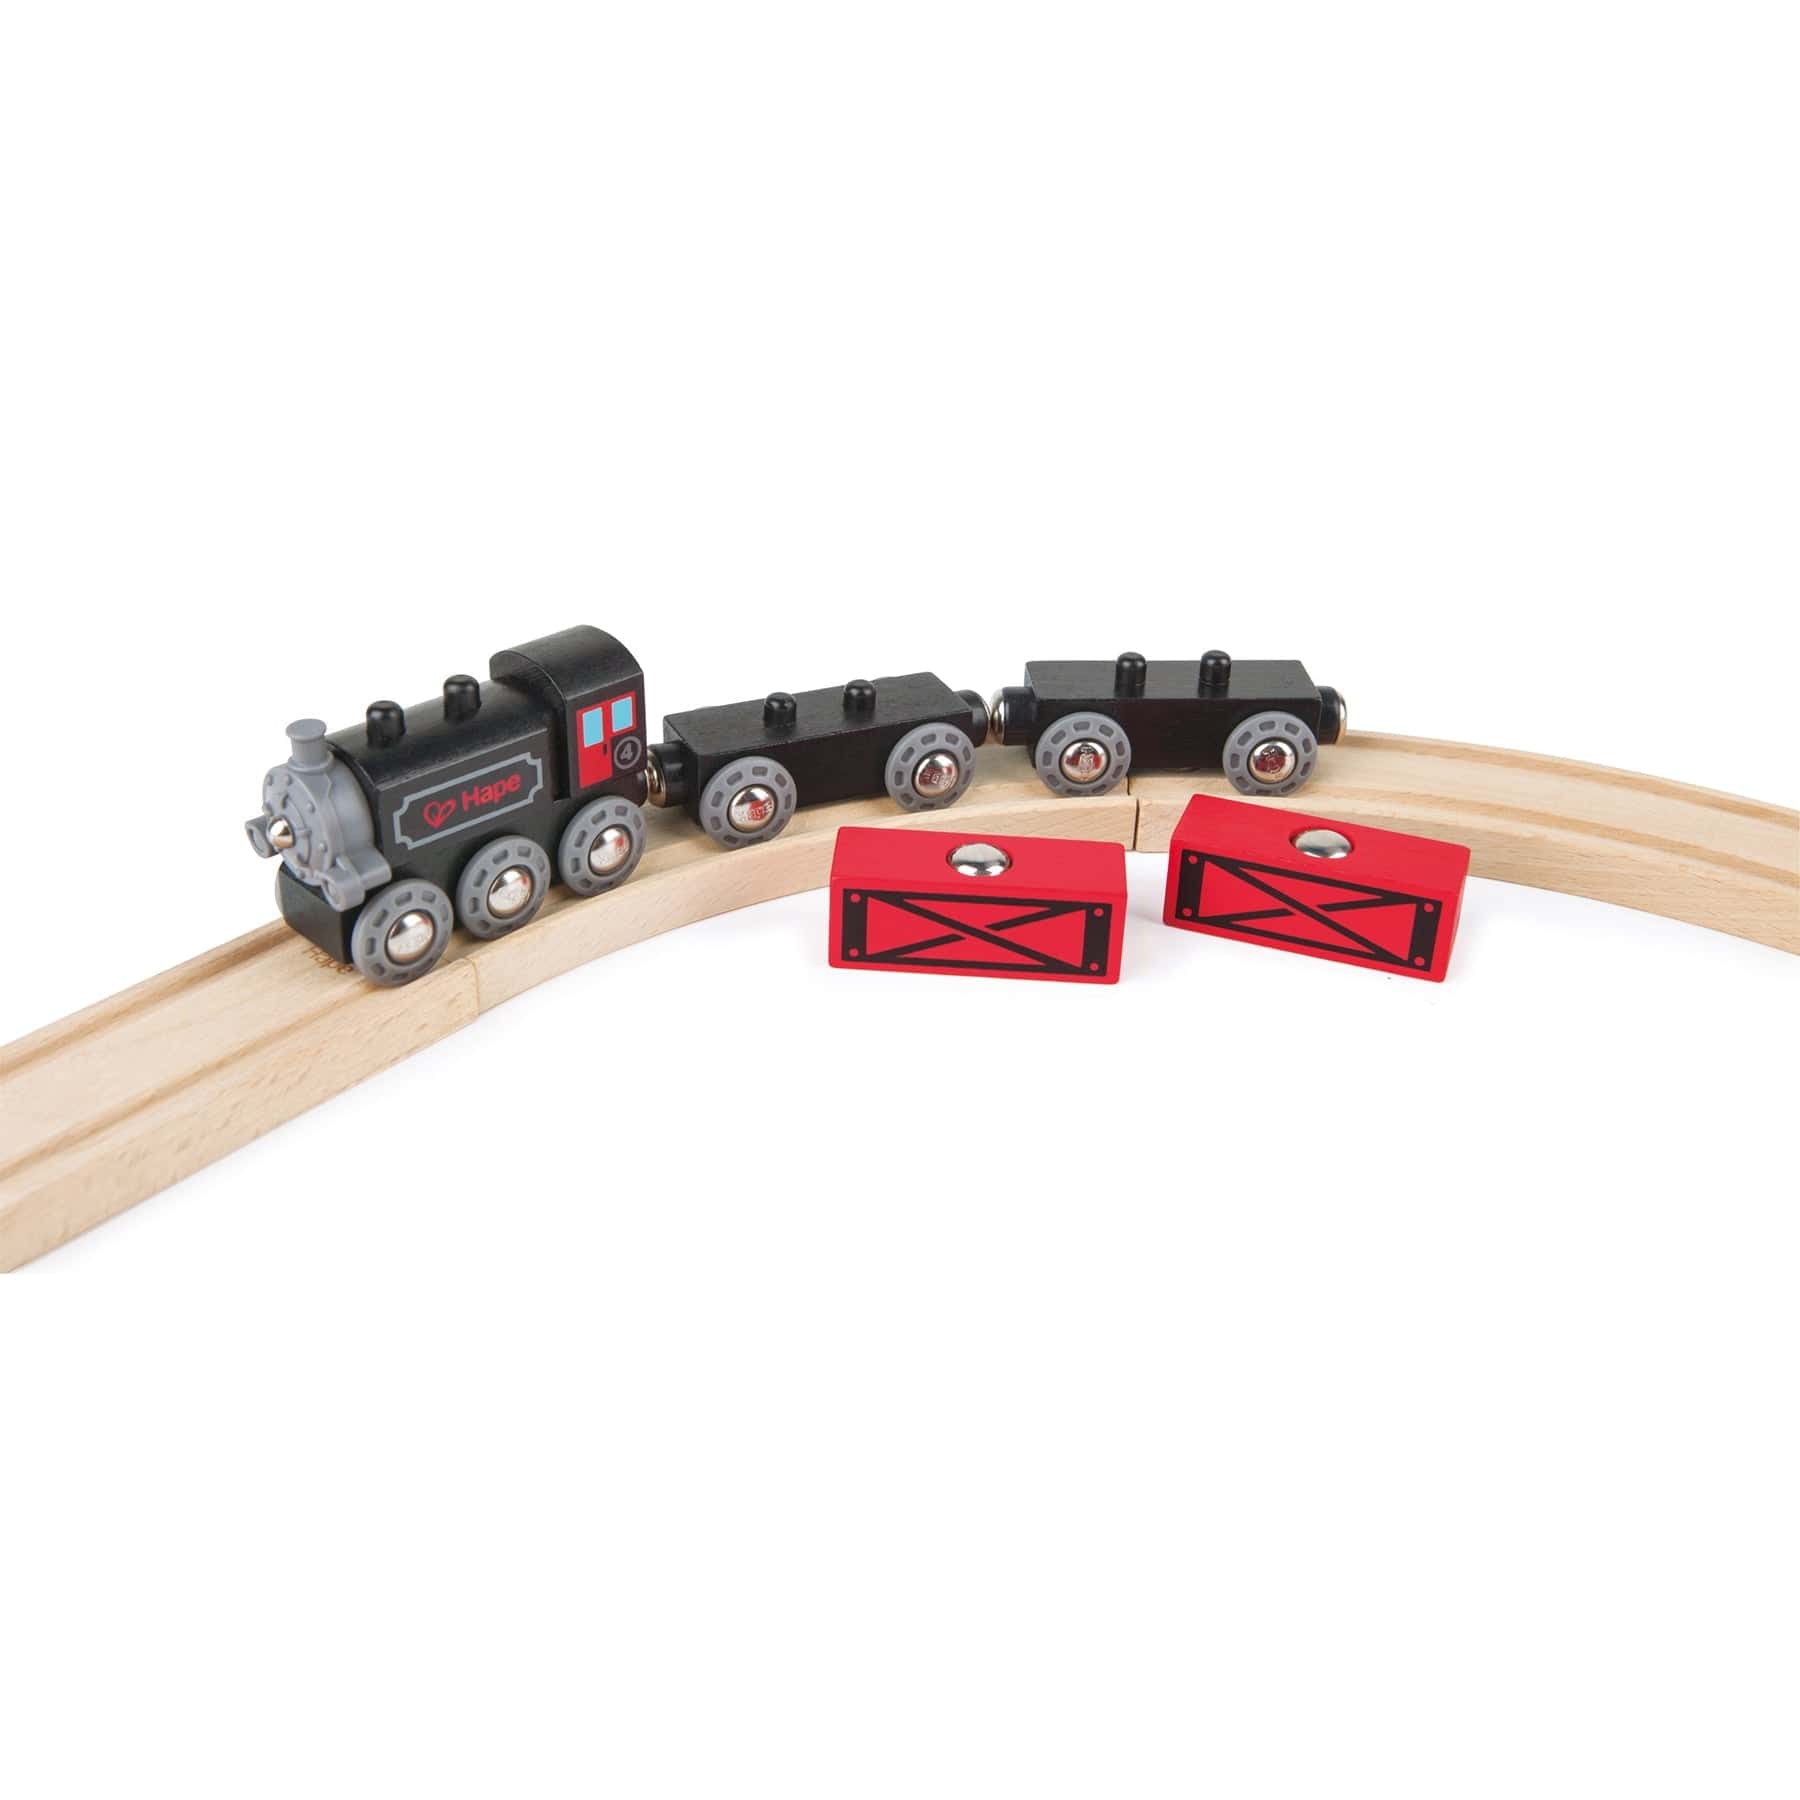 Hape Toys Hape Steam-Era Freight Train